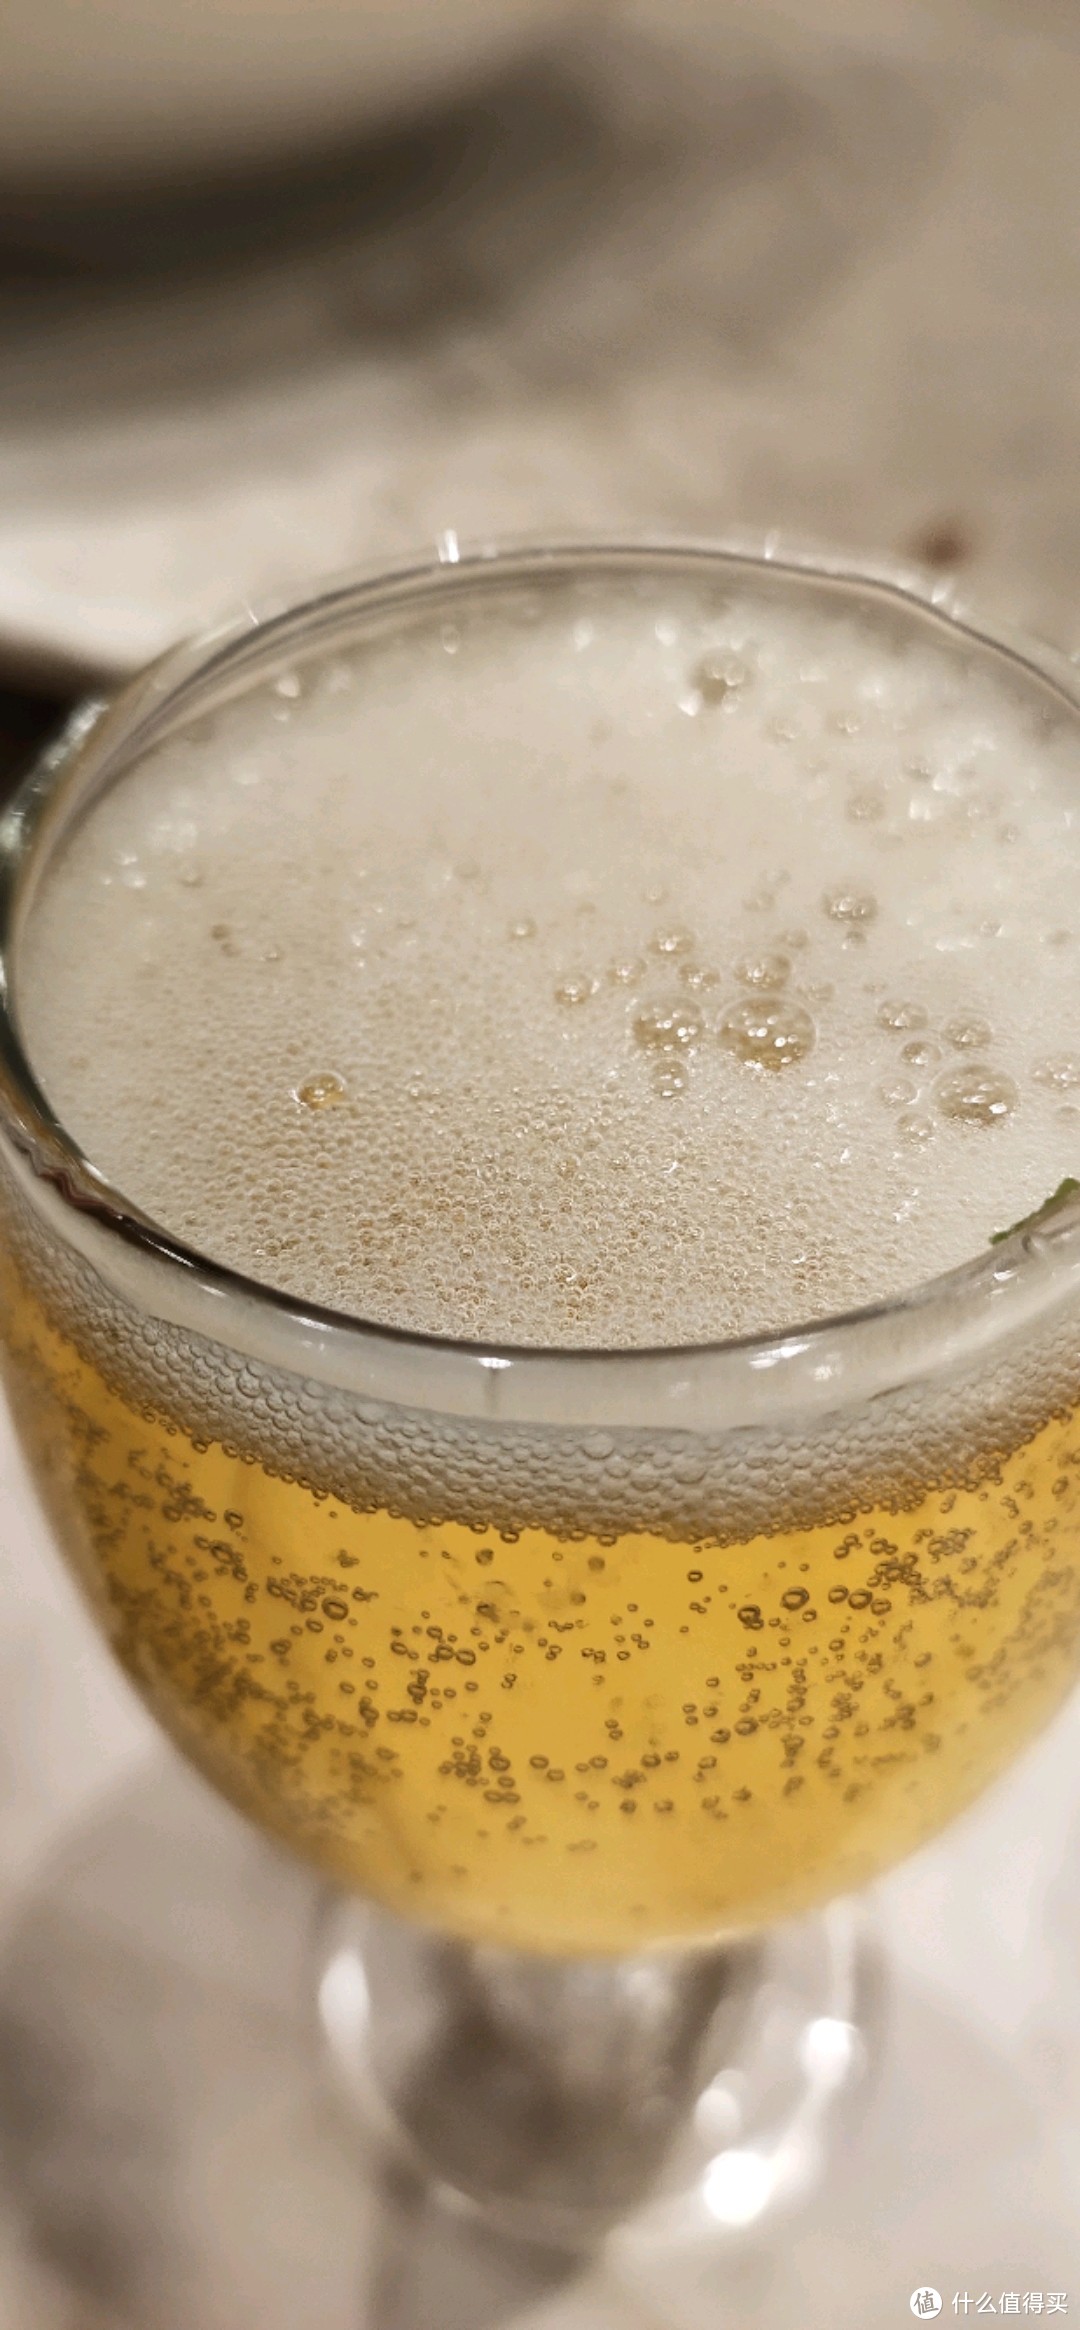 640ML规格的定制版青岛啤酒如何？第一次试饮号称大白金的特殊青啤定制版啤酒体验